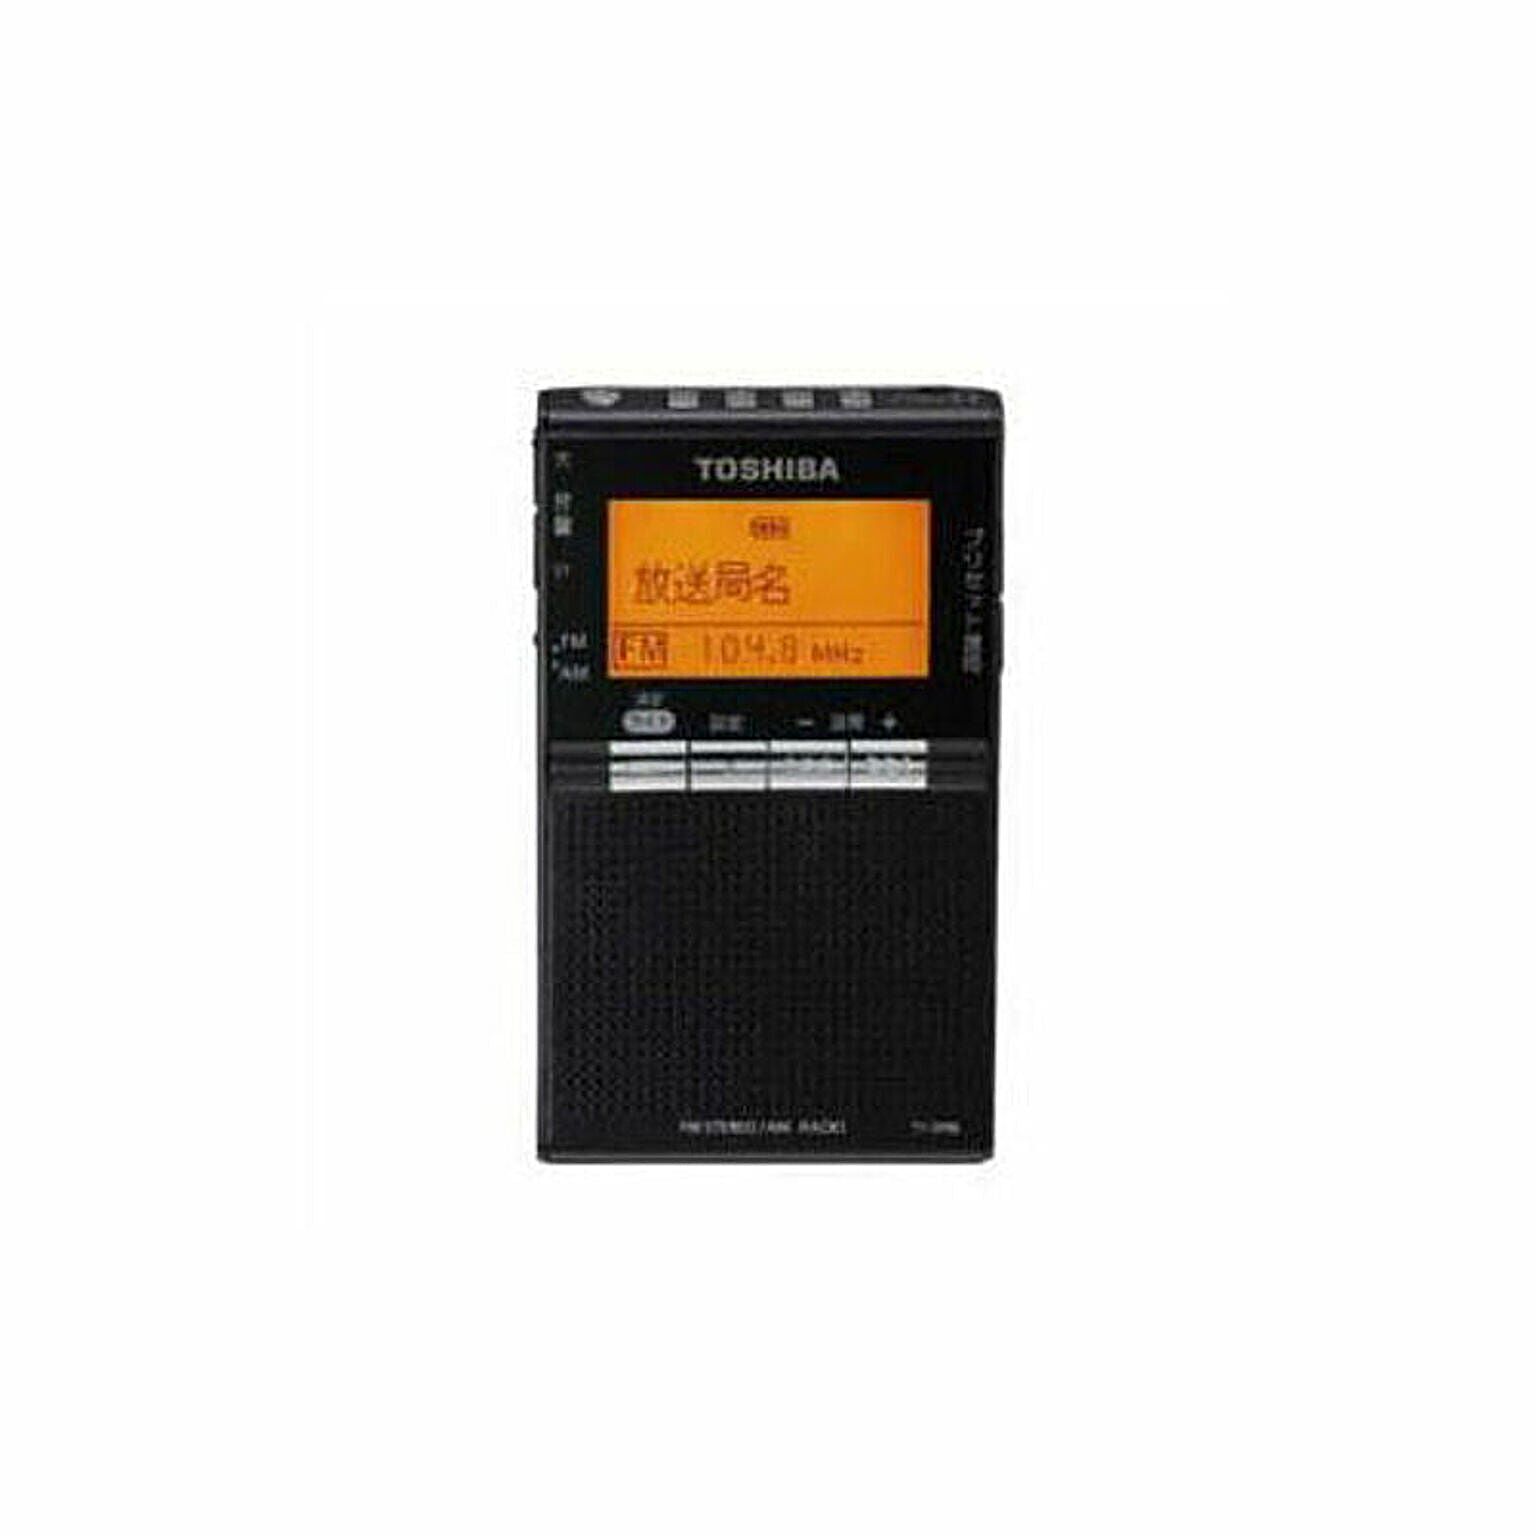 TOSHIBA ワイドFM対応 FM/AM 携帯ラジオ ブラック TY-SPR8KM